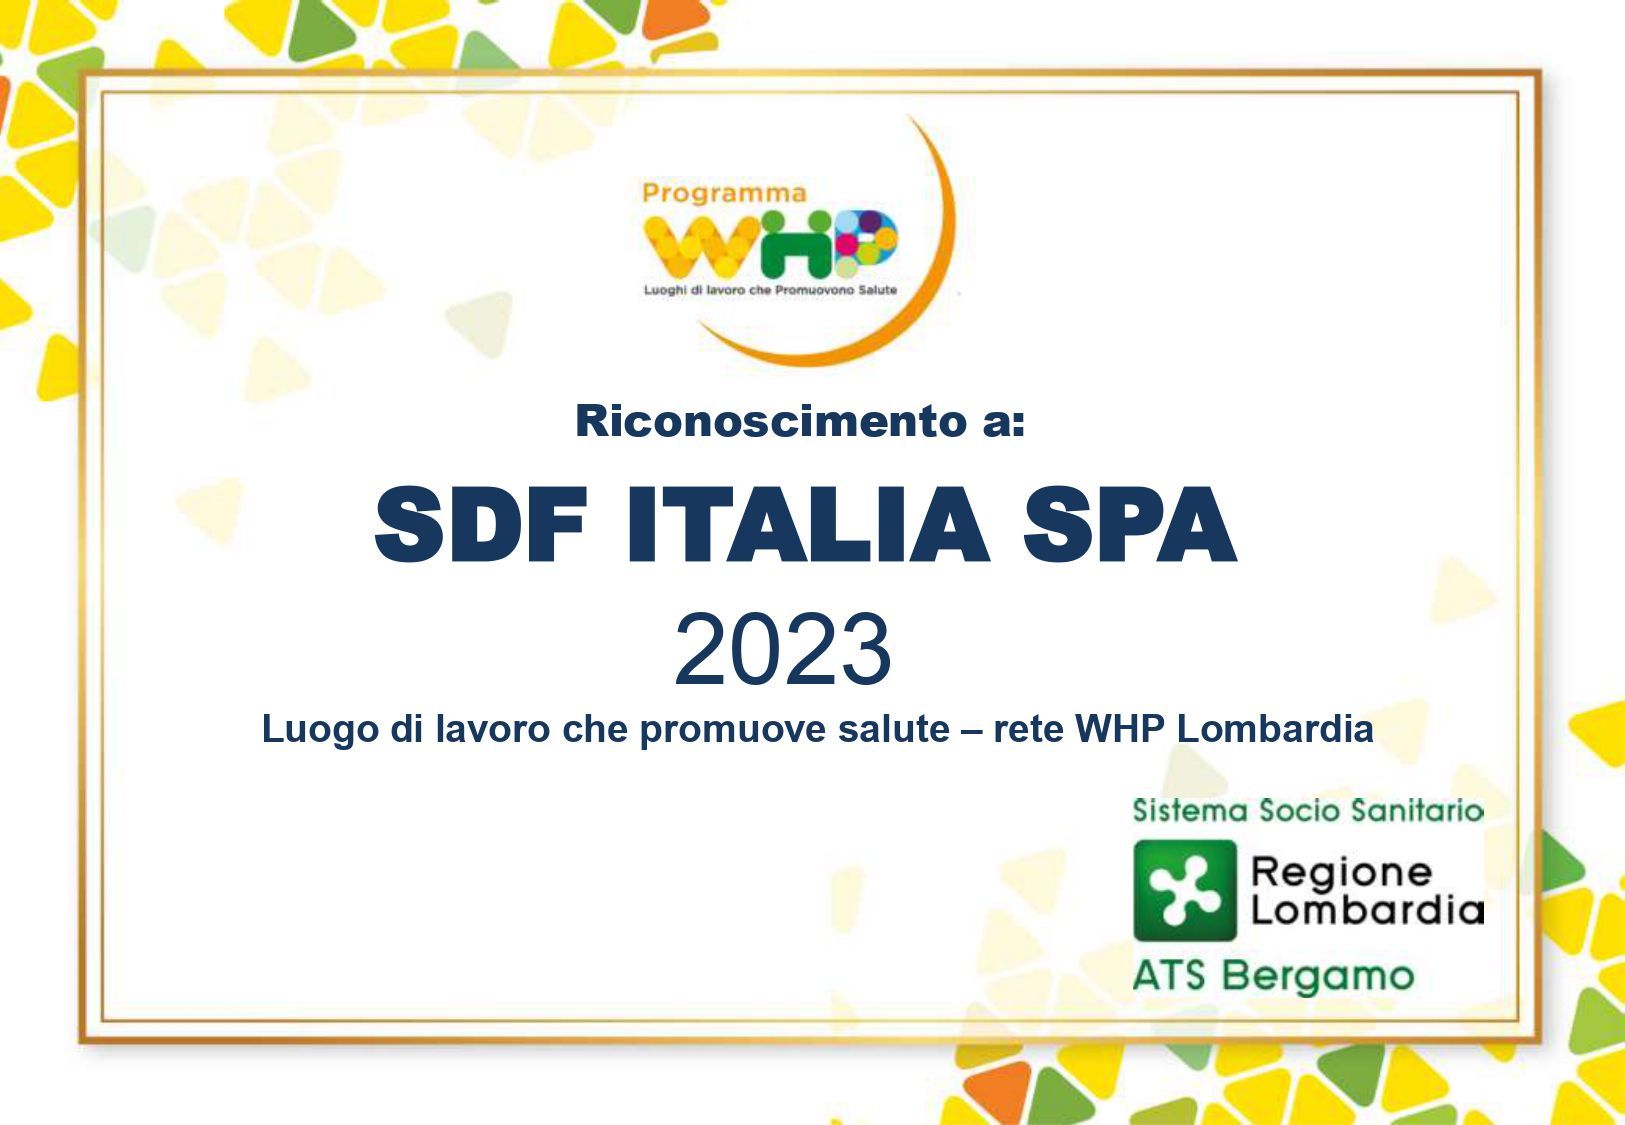 SDF ITALIA-Accred2023_page-0001.jpg